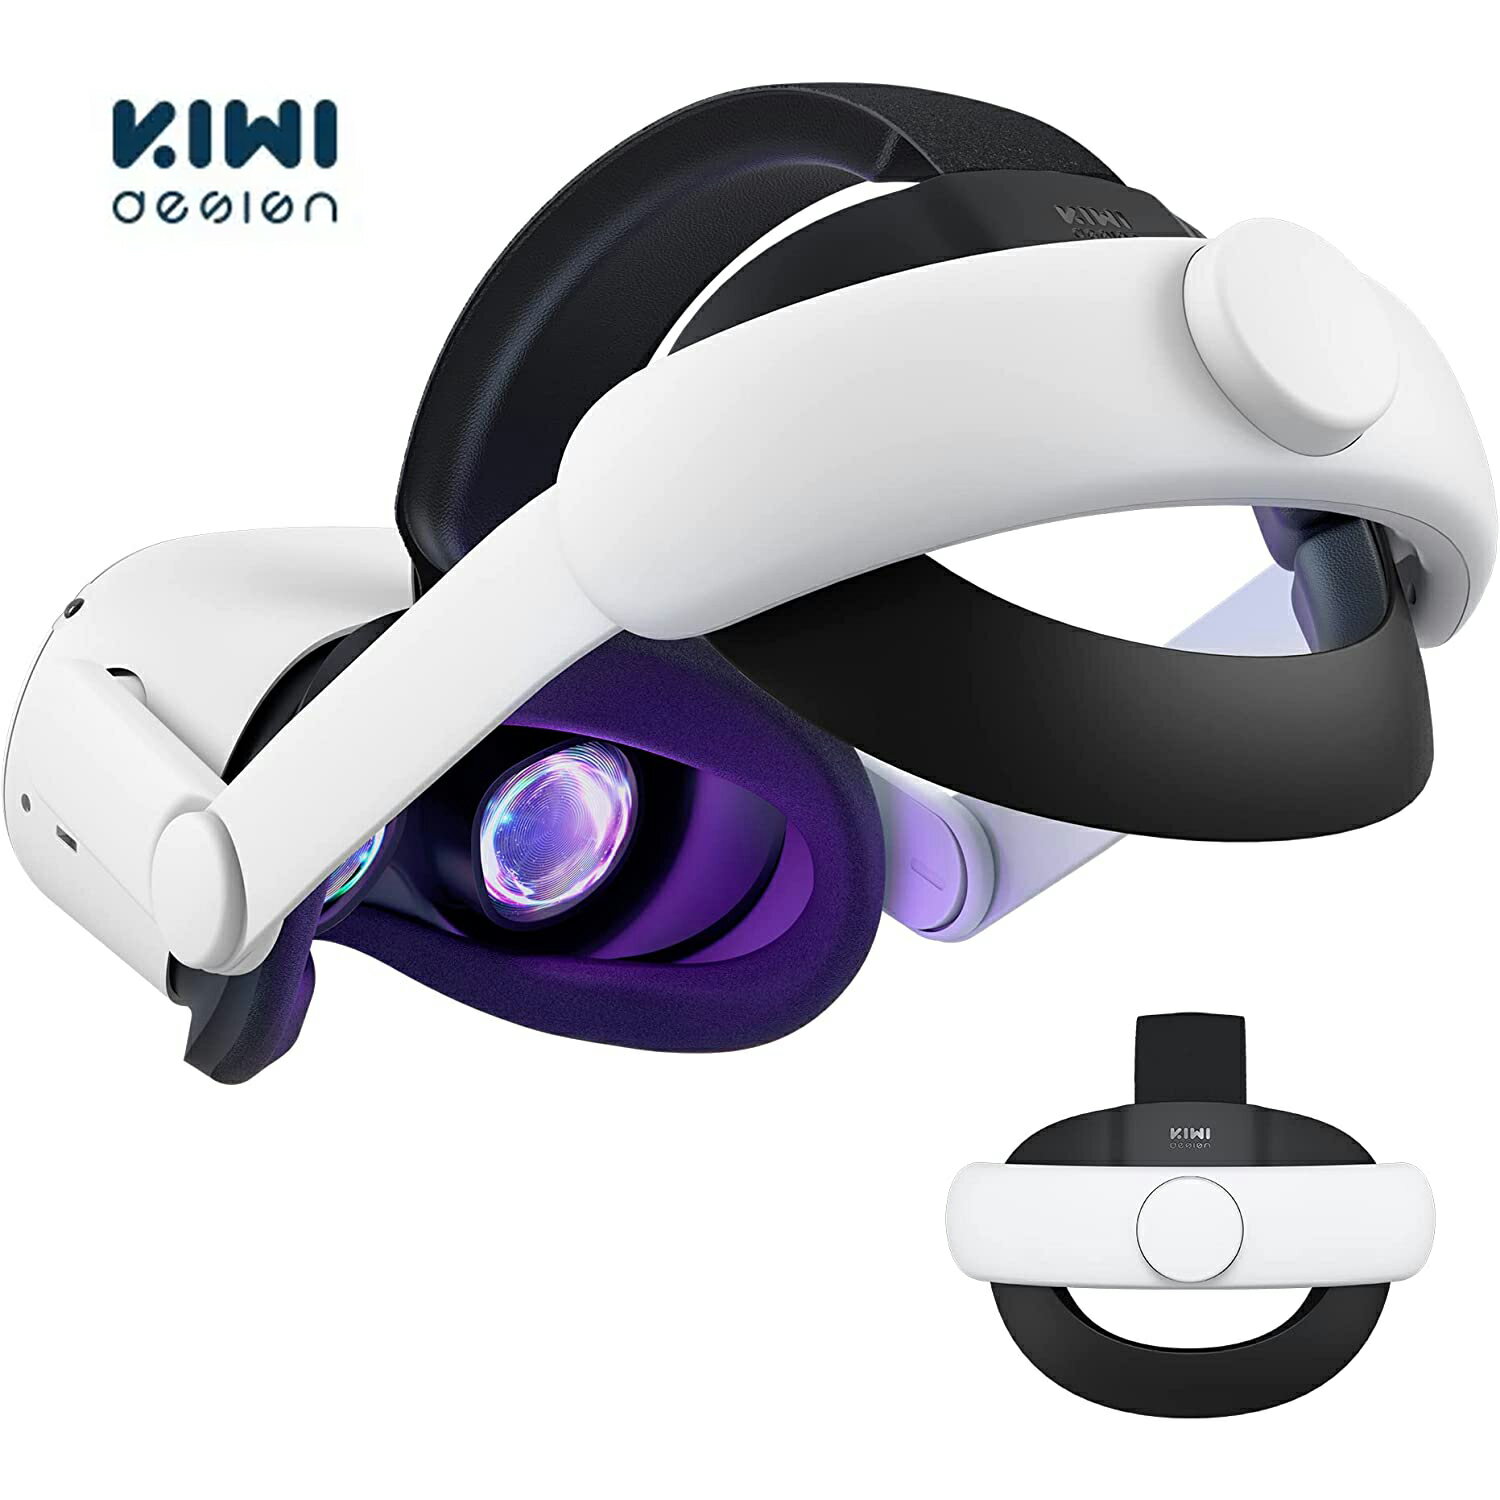 【KIWI design 日本正規代理店】Meta/Oculus Quest 2 ヘッドセット VRゴーグル ストラップ エリートストラップ 代替品 52度 フリップ可能なヒンジデザイン 簡単クリーニング フィットダイアル…